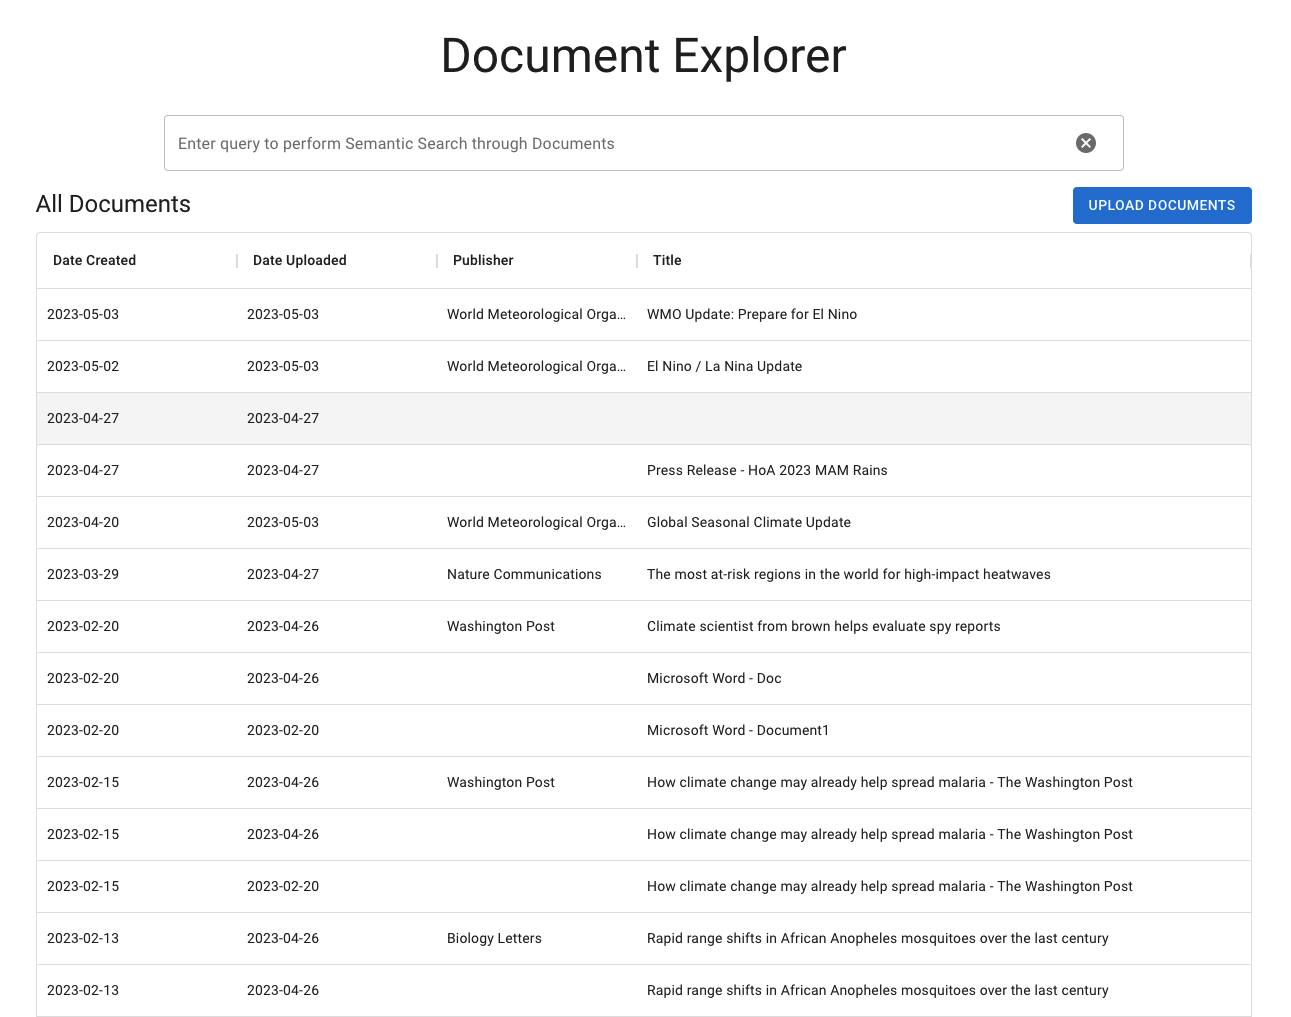 Document Explorer Table